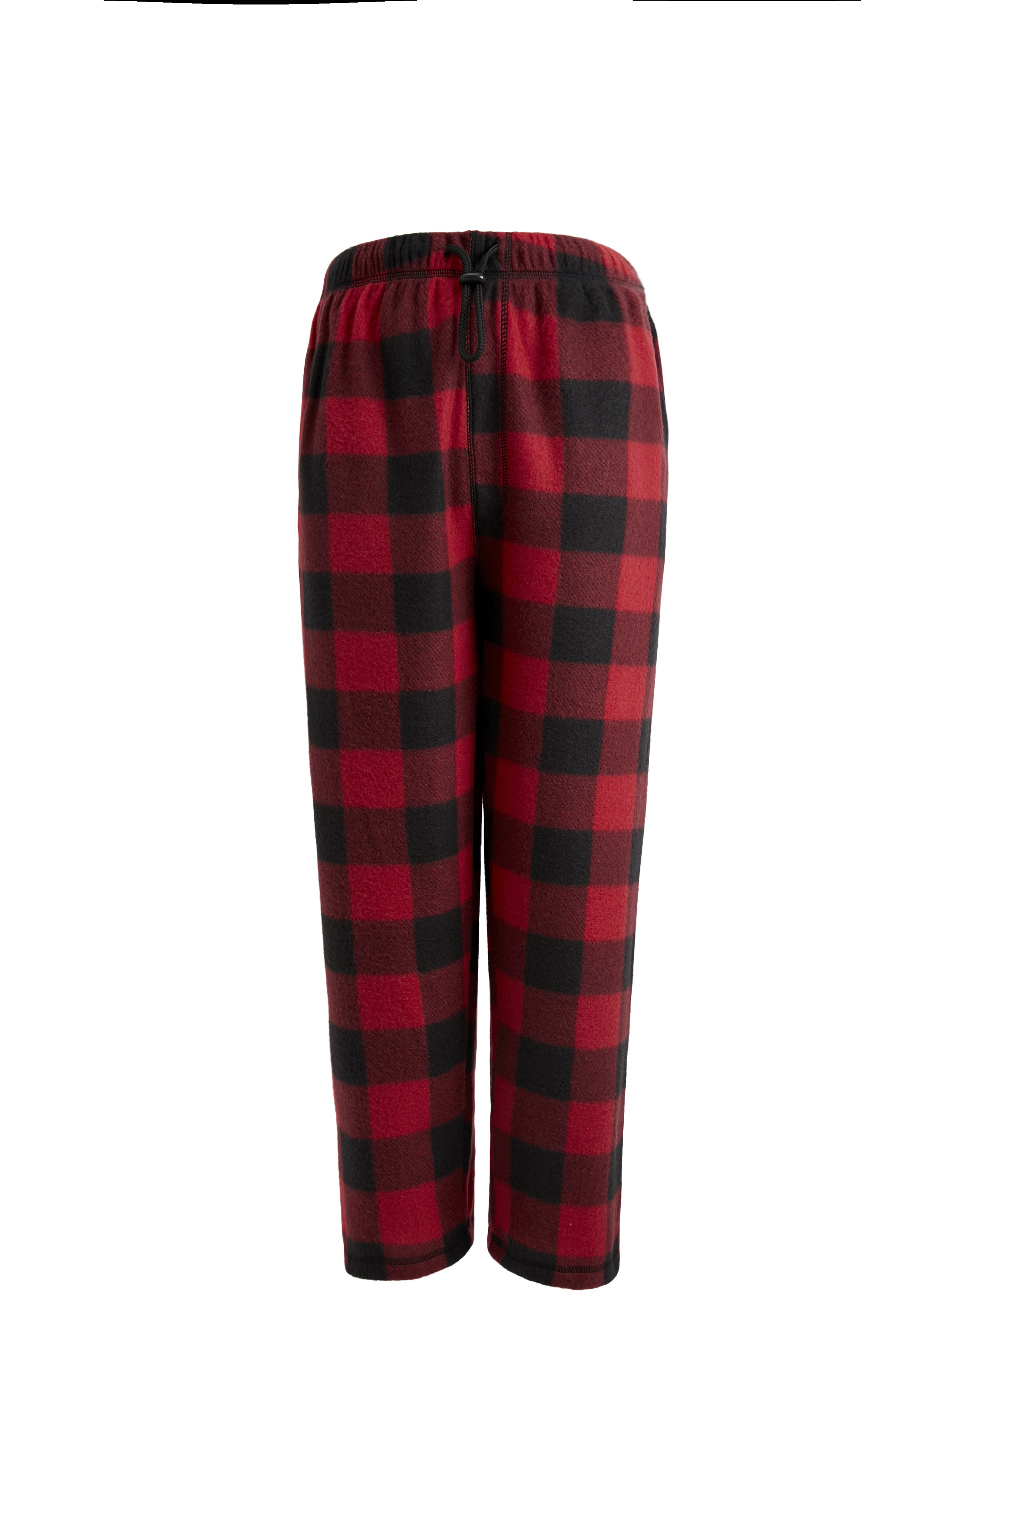 Wholesale Men's Fleece Pajama Pants - 3X-5X, Red/Black Plaid